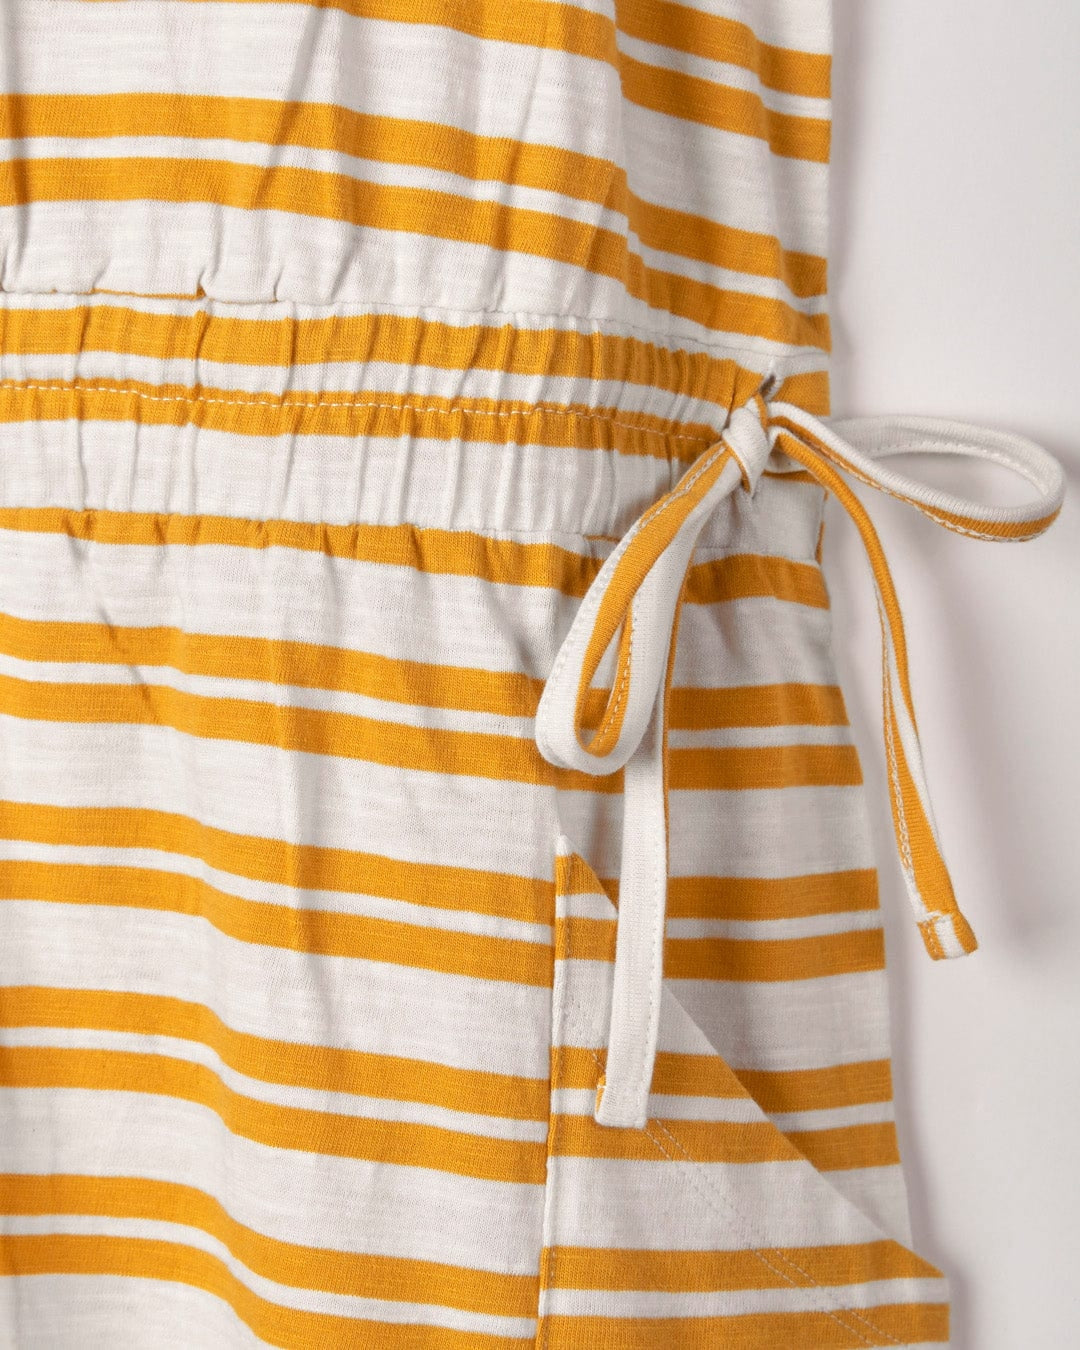 Saltrock women's Skylar Bauhaus sleeveless yellow stripe dress with drawstring waist.